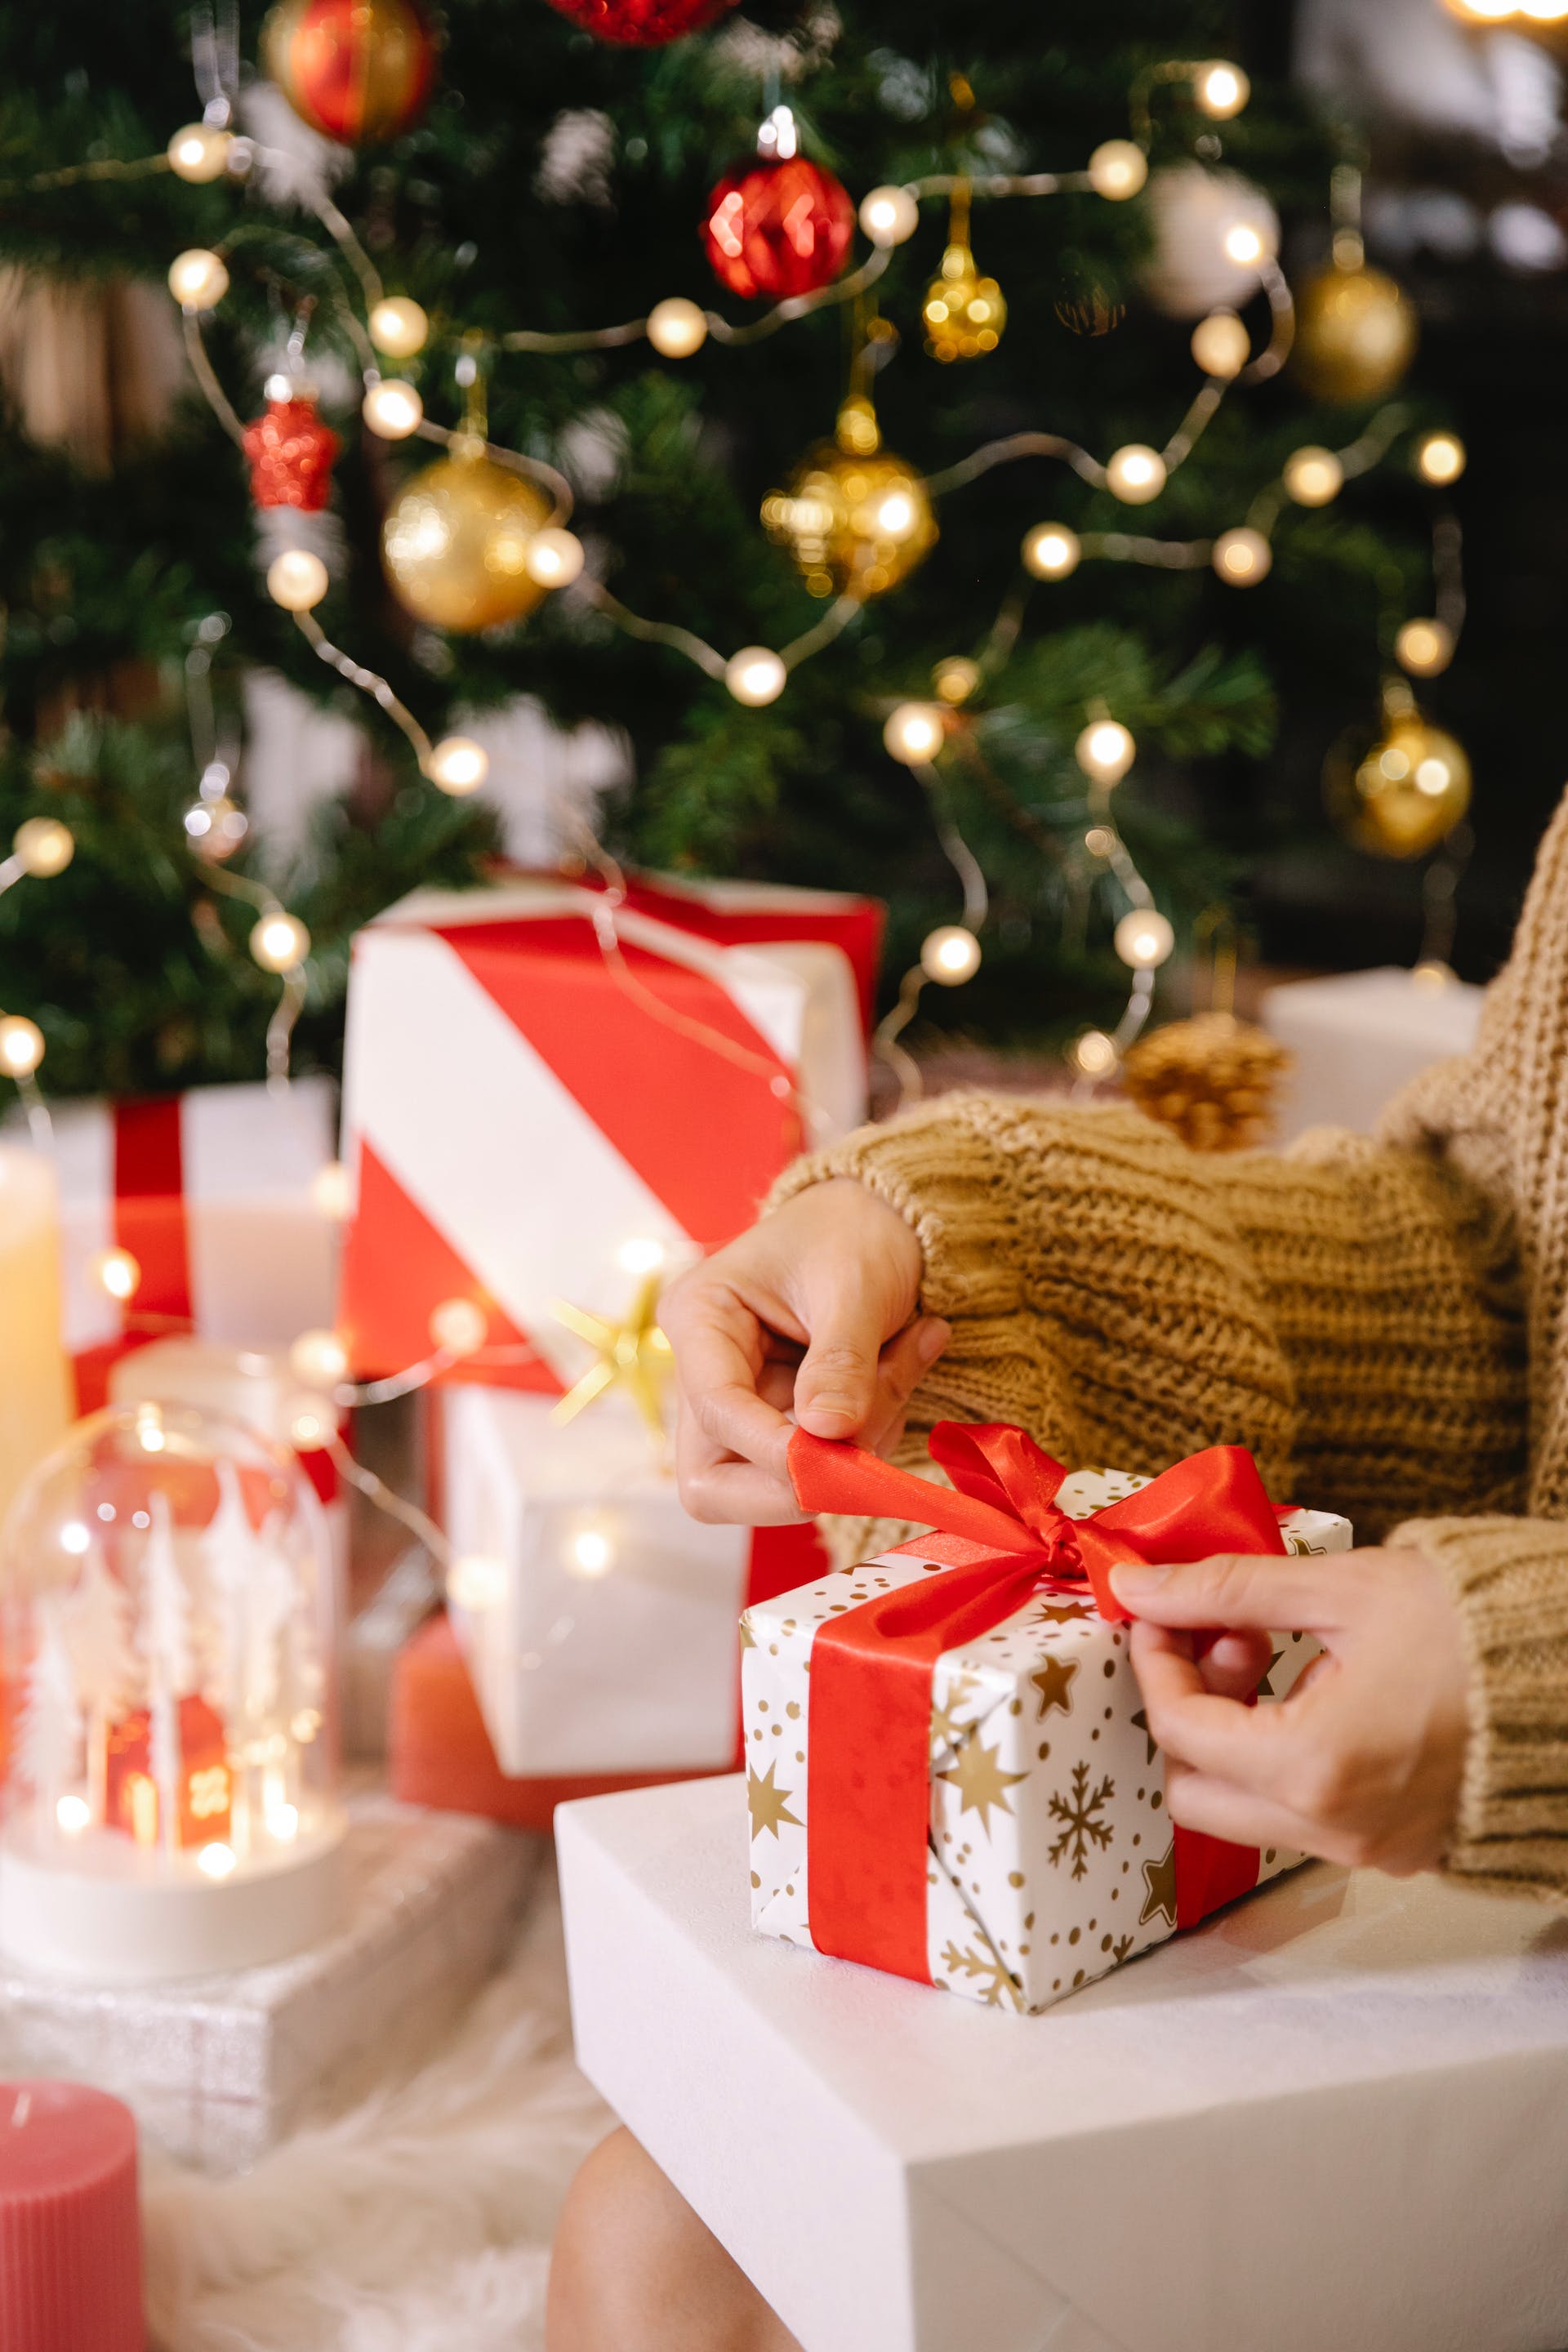 Femme emballant un paquet cadeau près d'un sapin de Noël | Source : Pexels